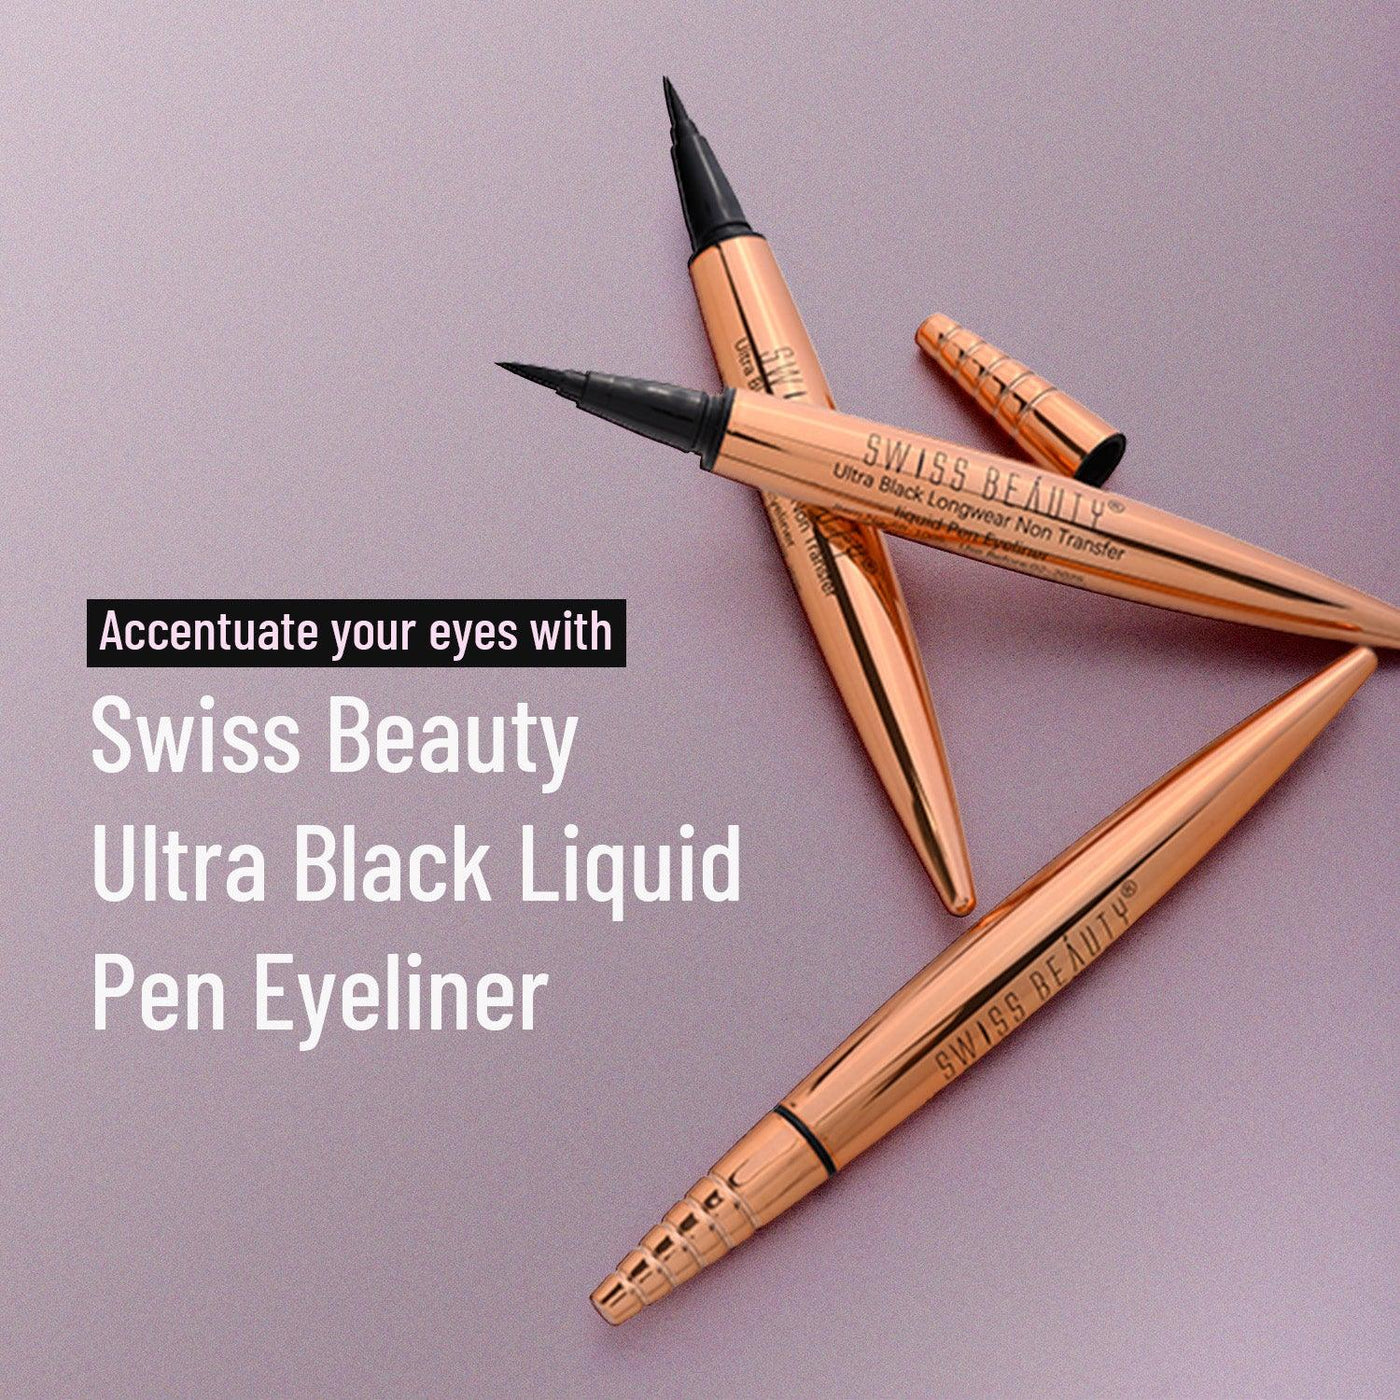 Sketch Pen Eyeliner - Buy Waterproof & Smudge Proof Eyeliner Online